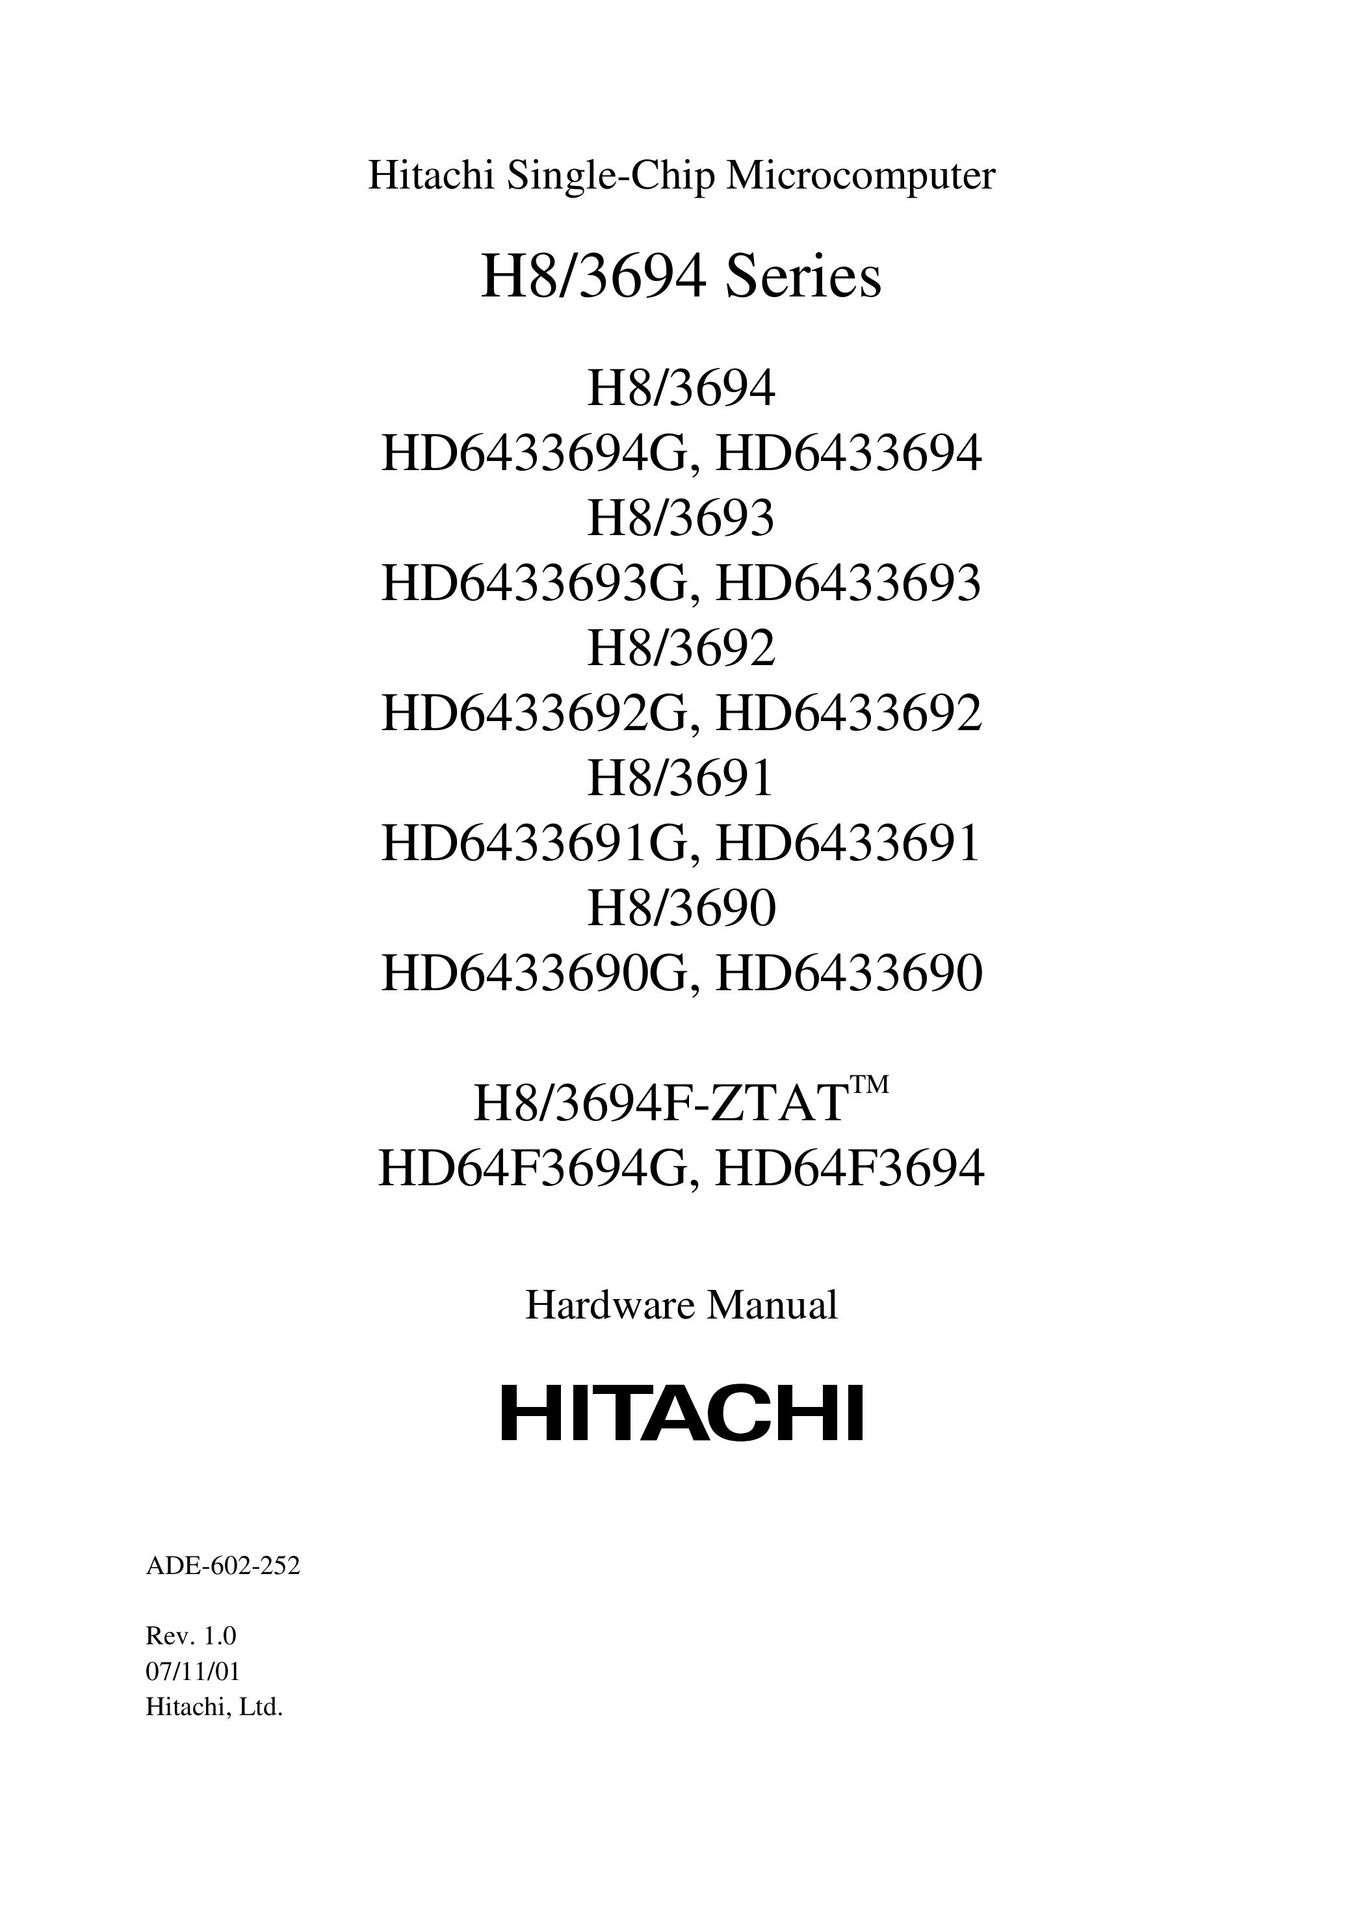 Hitachi H*/3694F-ZTAT TV Mount User Manual